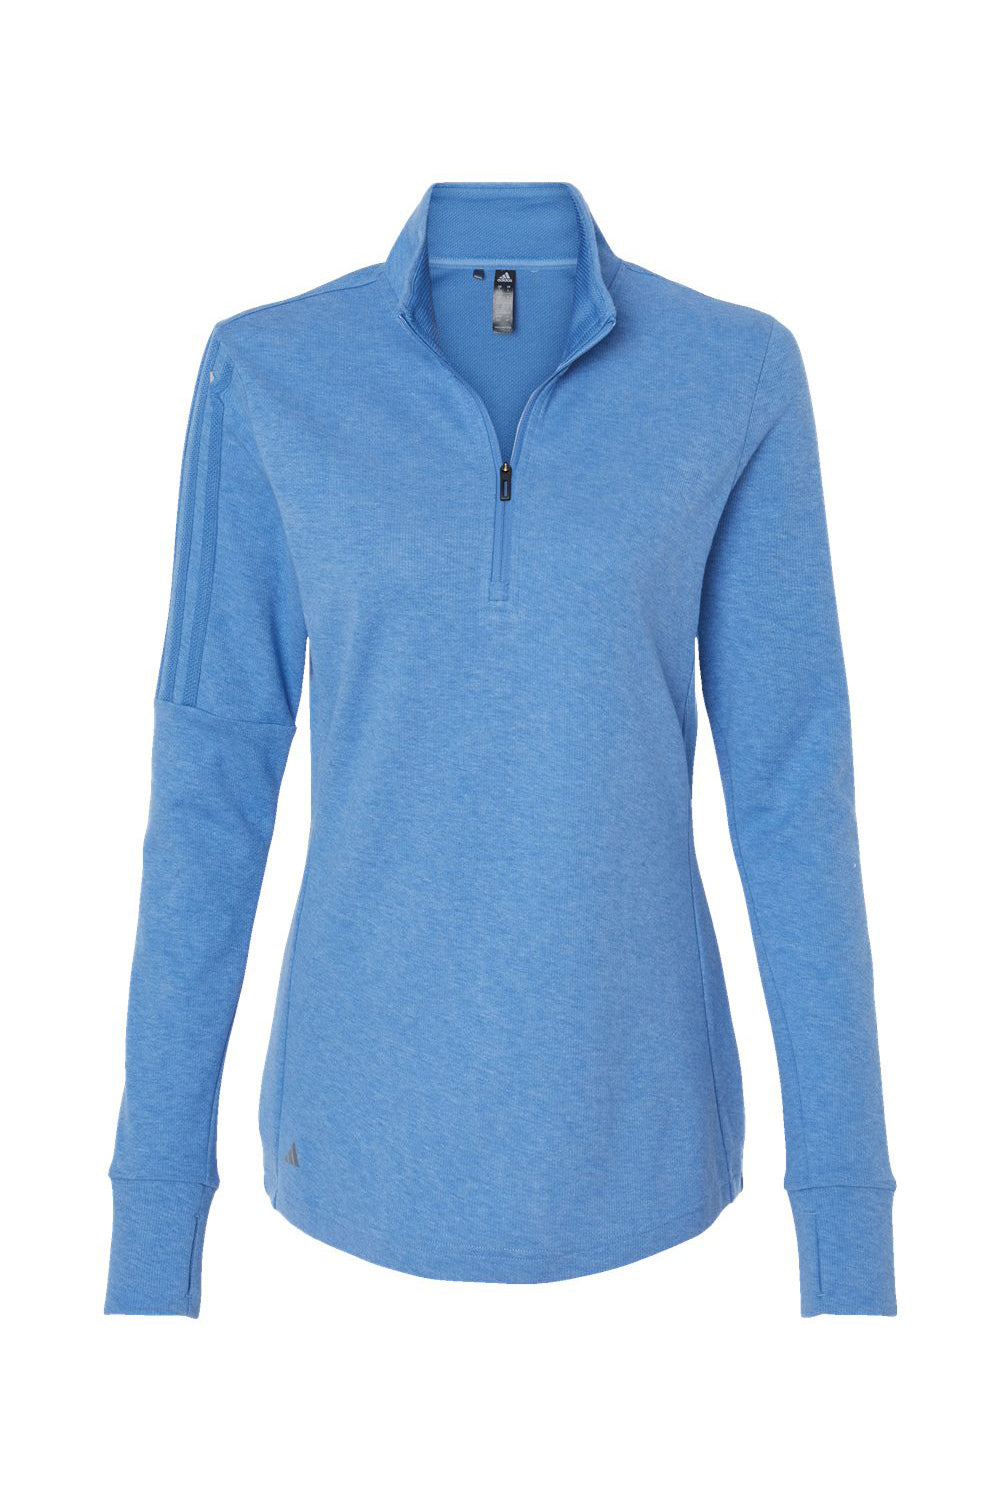 Adidas A555 Womens 3 Stripes Moisture Wicking 1/4 Zip Sweater Focus Blue Melange Flat Front